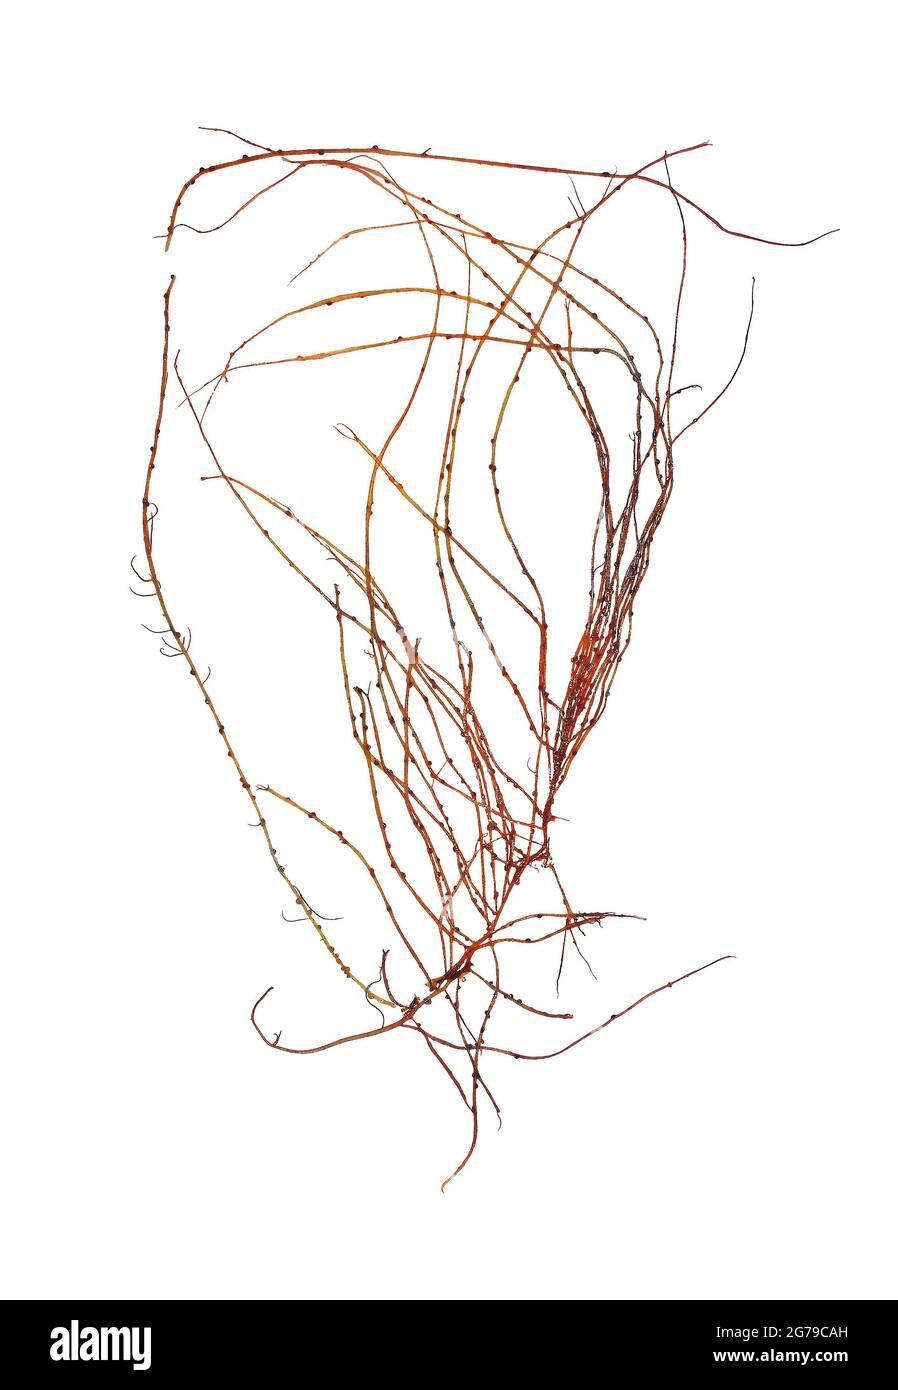 gracilariopsis-longissima-sg-gmelin-m-steentoft-lm-irvine-wf-farnham-red-alga-florideophyceae-2G79CAH.jpg